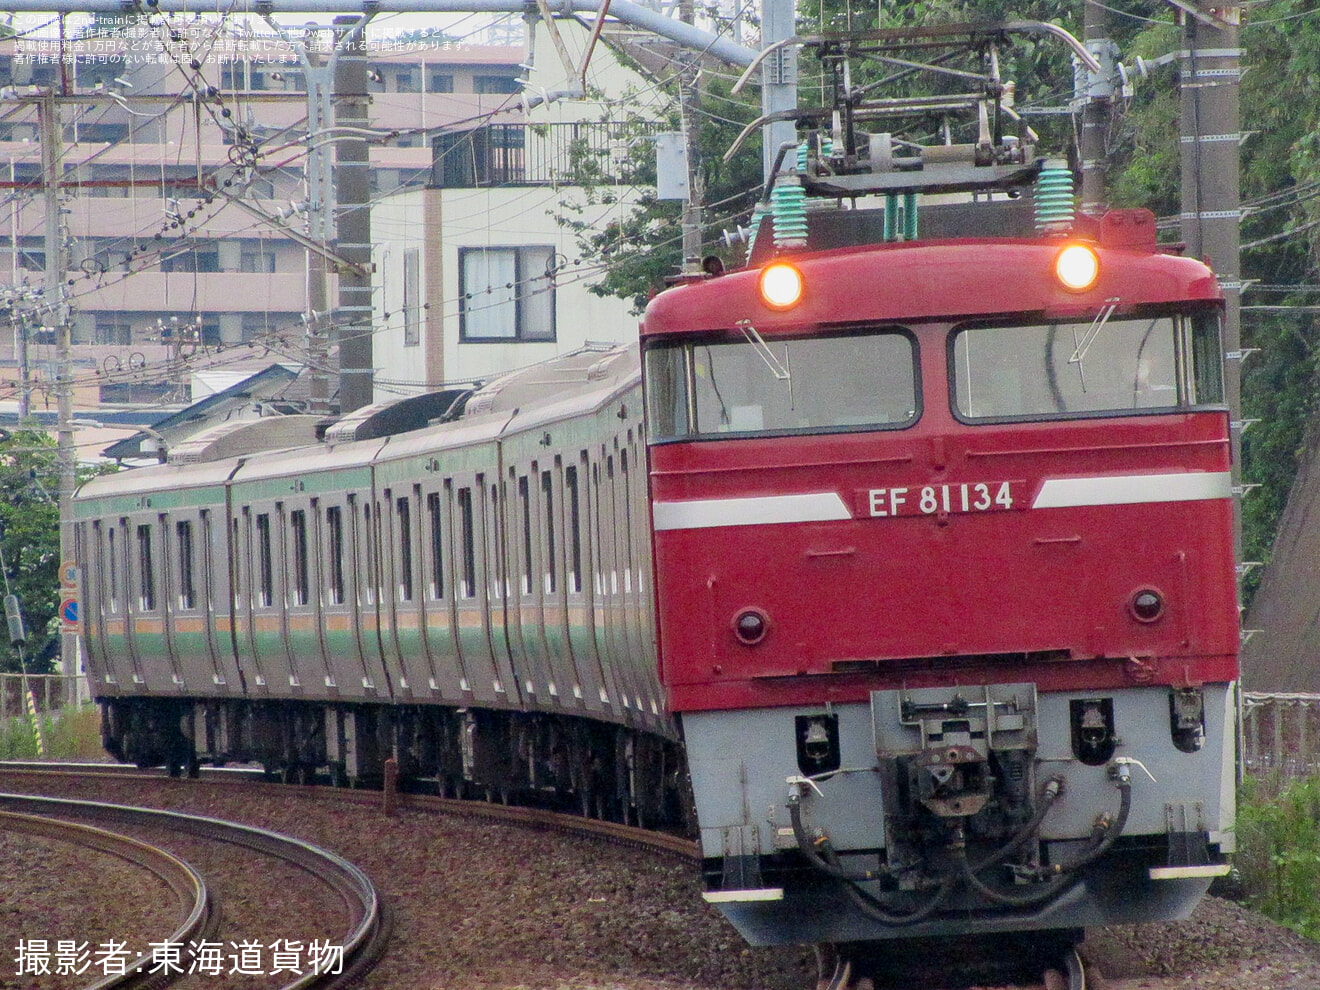 【JR東】E231系S-03編成が羽越本線方面へ配給輸送の拡大写真